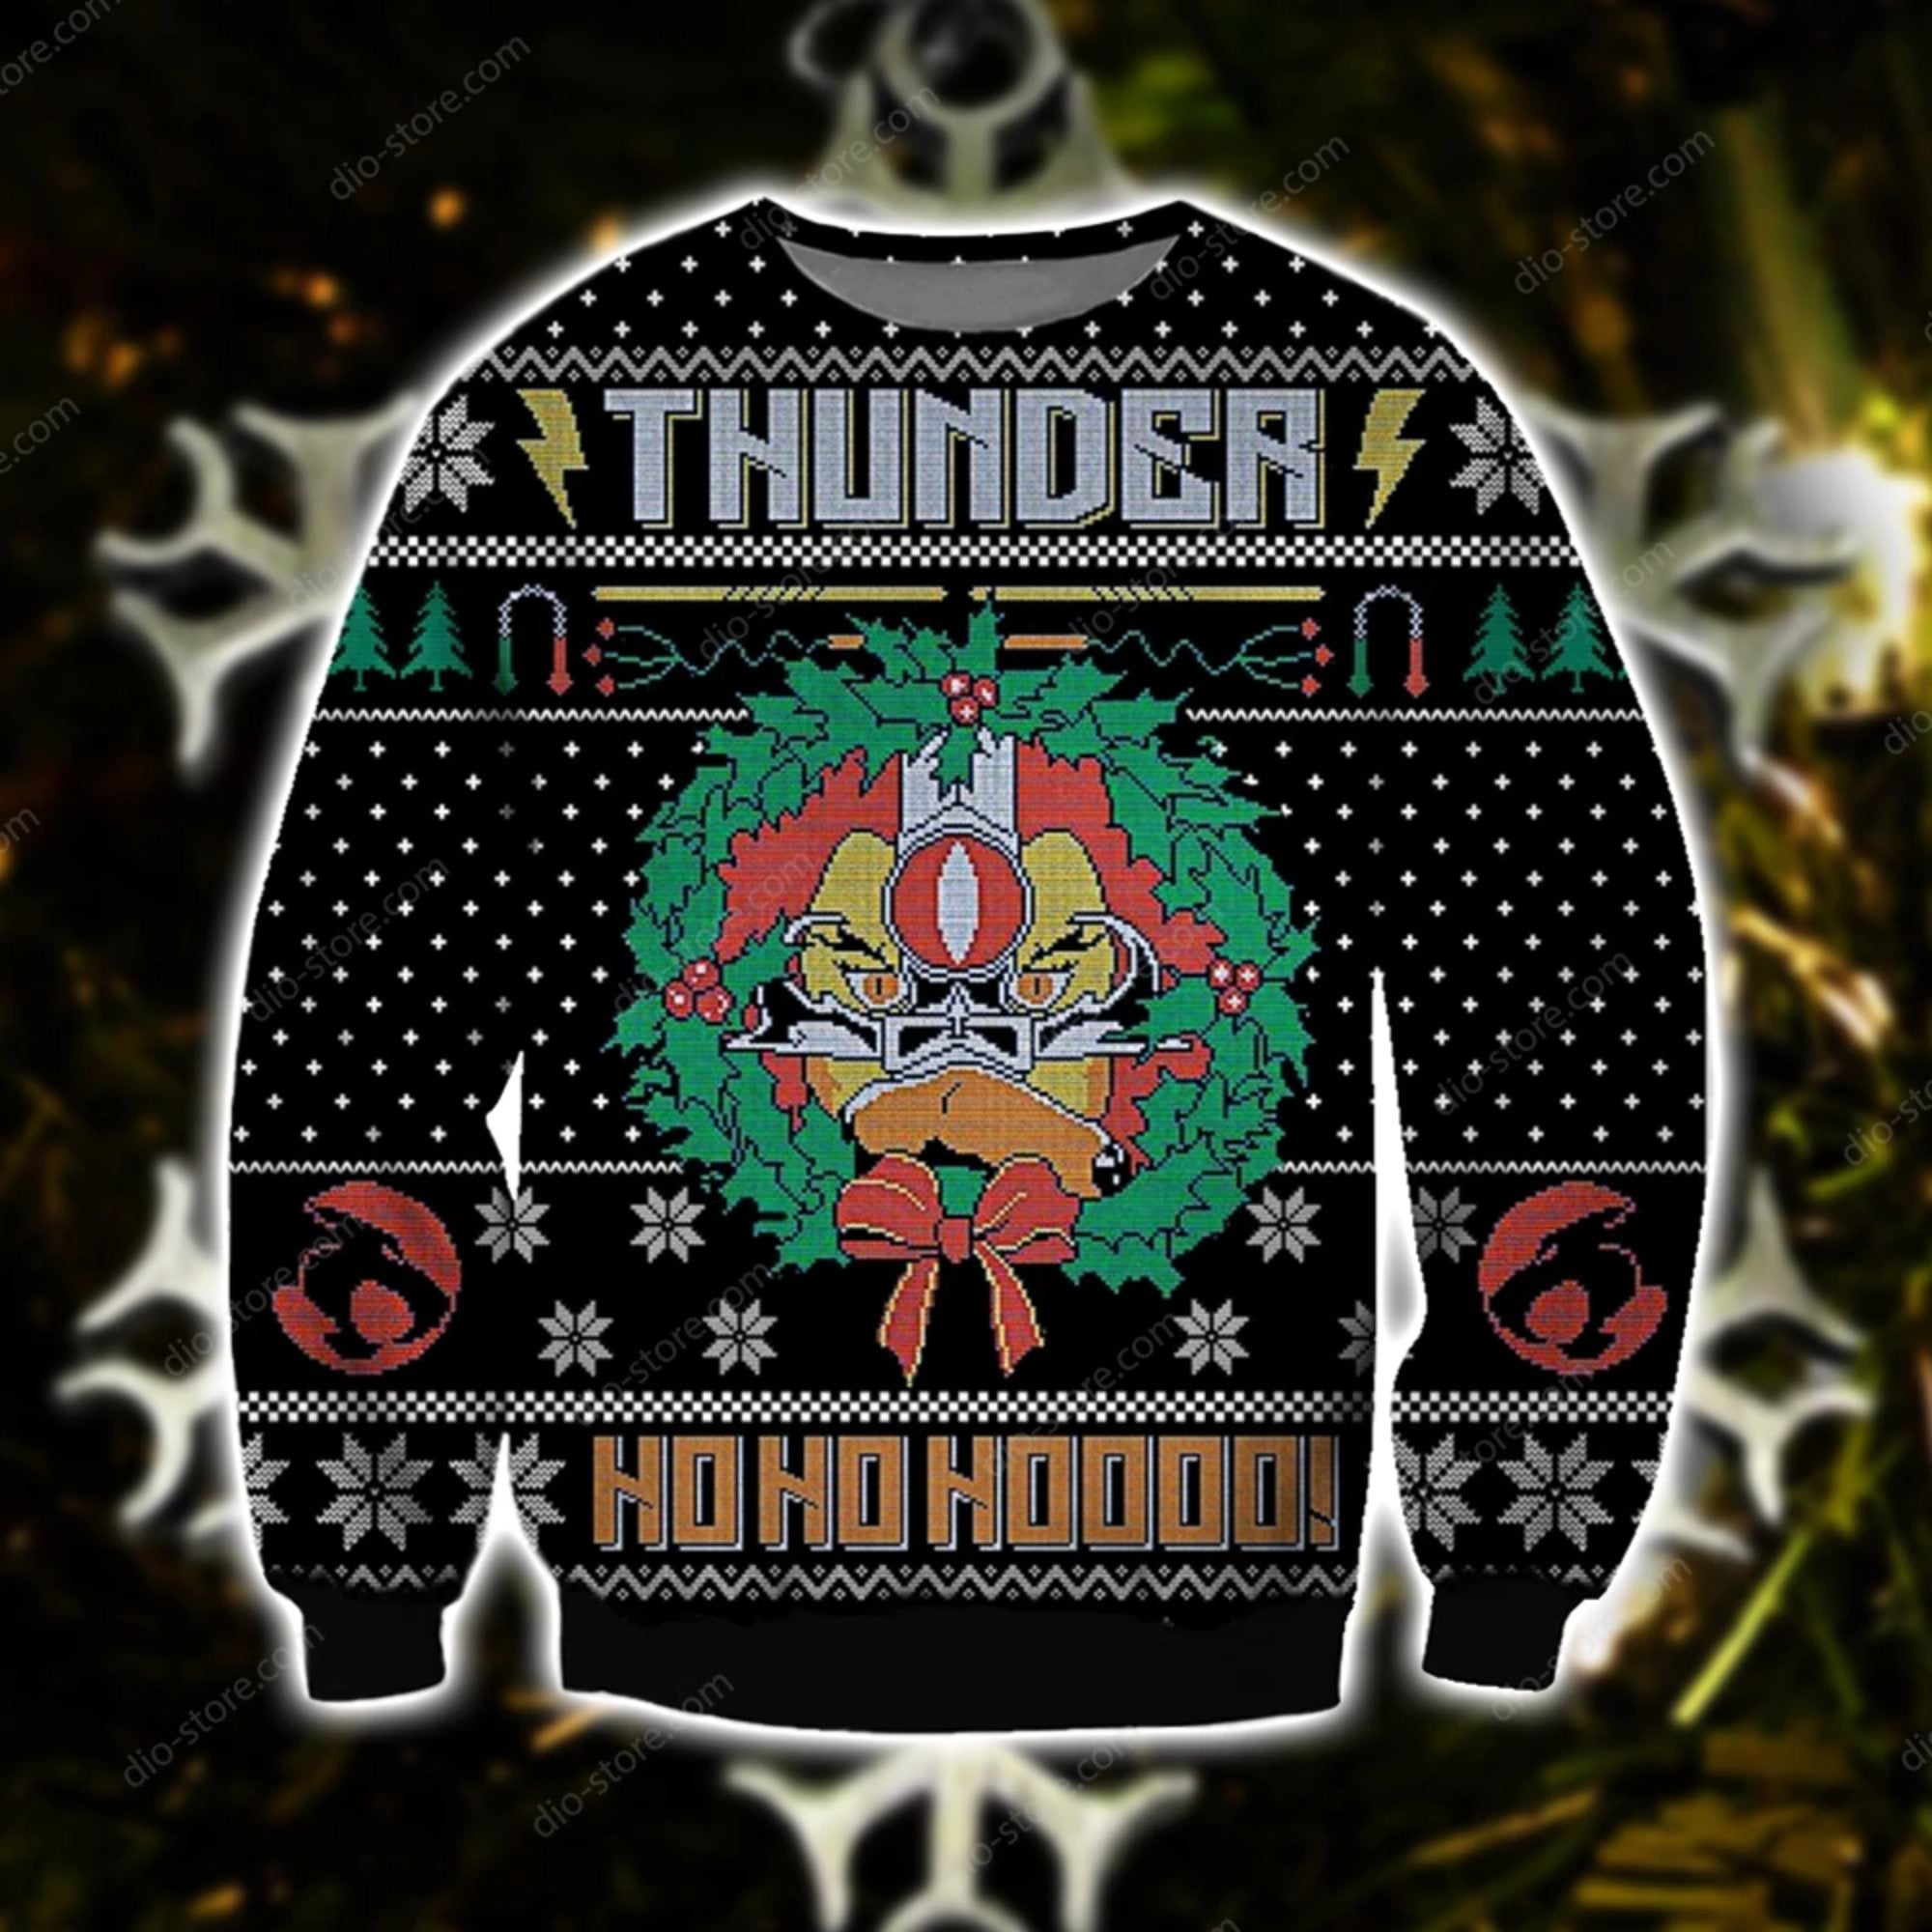 Thunder Ho Ho Ho Knitting Pattern 3D Print Ugly Christmas Sweater Hoodie All Over Printed Cint10577